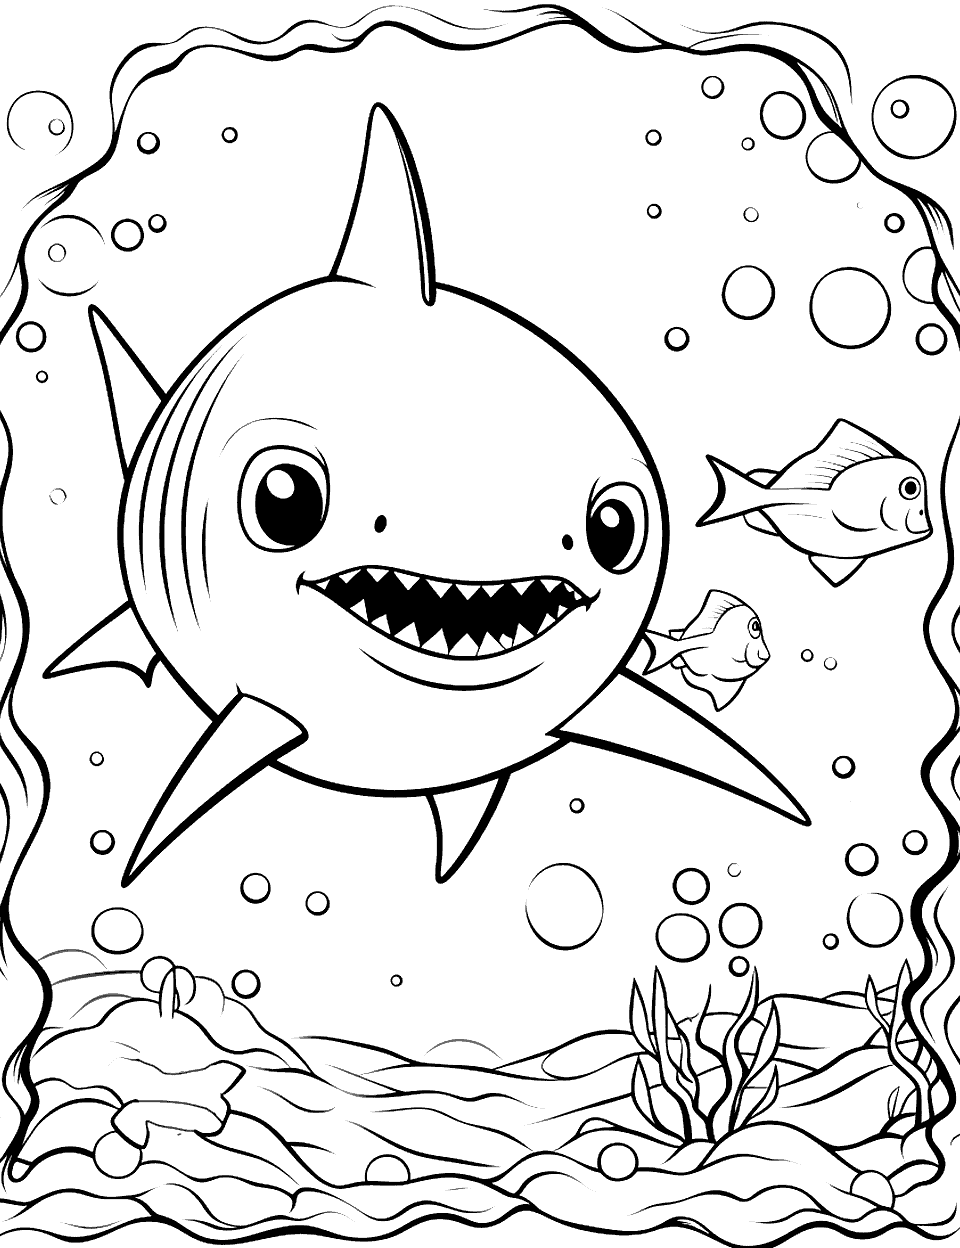 Mystical Underwater Cavern Baby Shark Coloring Page - Baby Shark exploring a mystical underwater cavern.